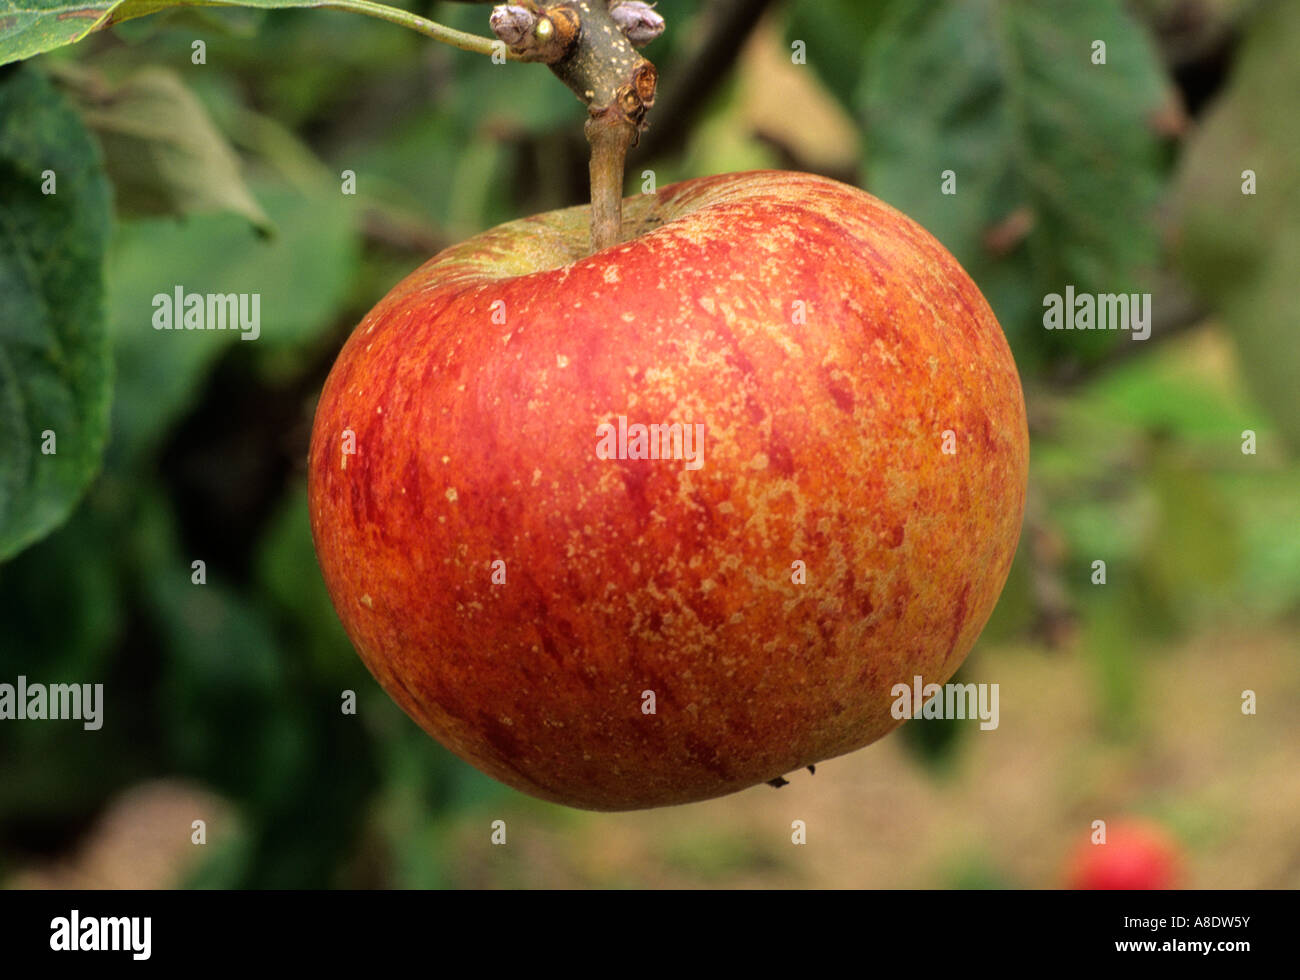 Apple Cox's Orange Pippin variety varieties fruit apples growing on tree, healthy eating Stock Photo